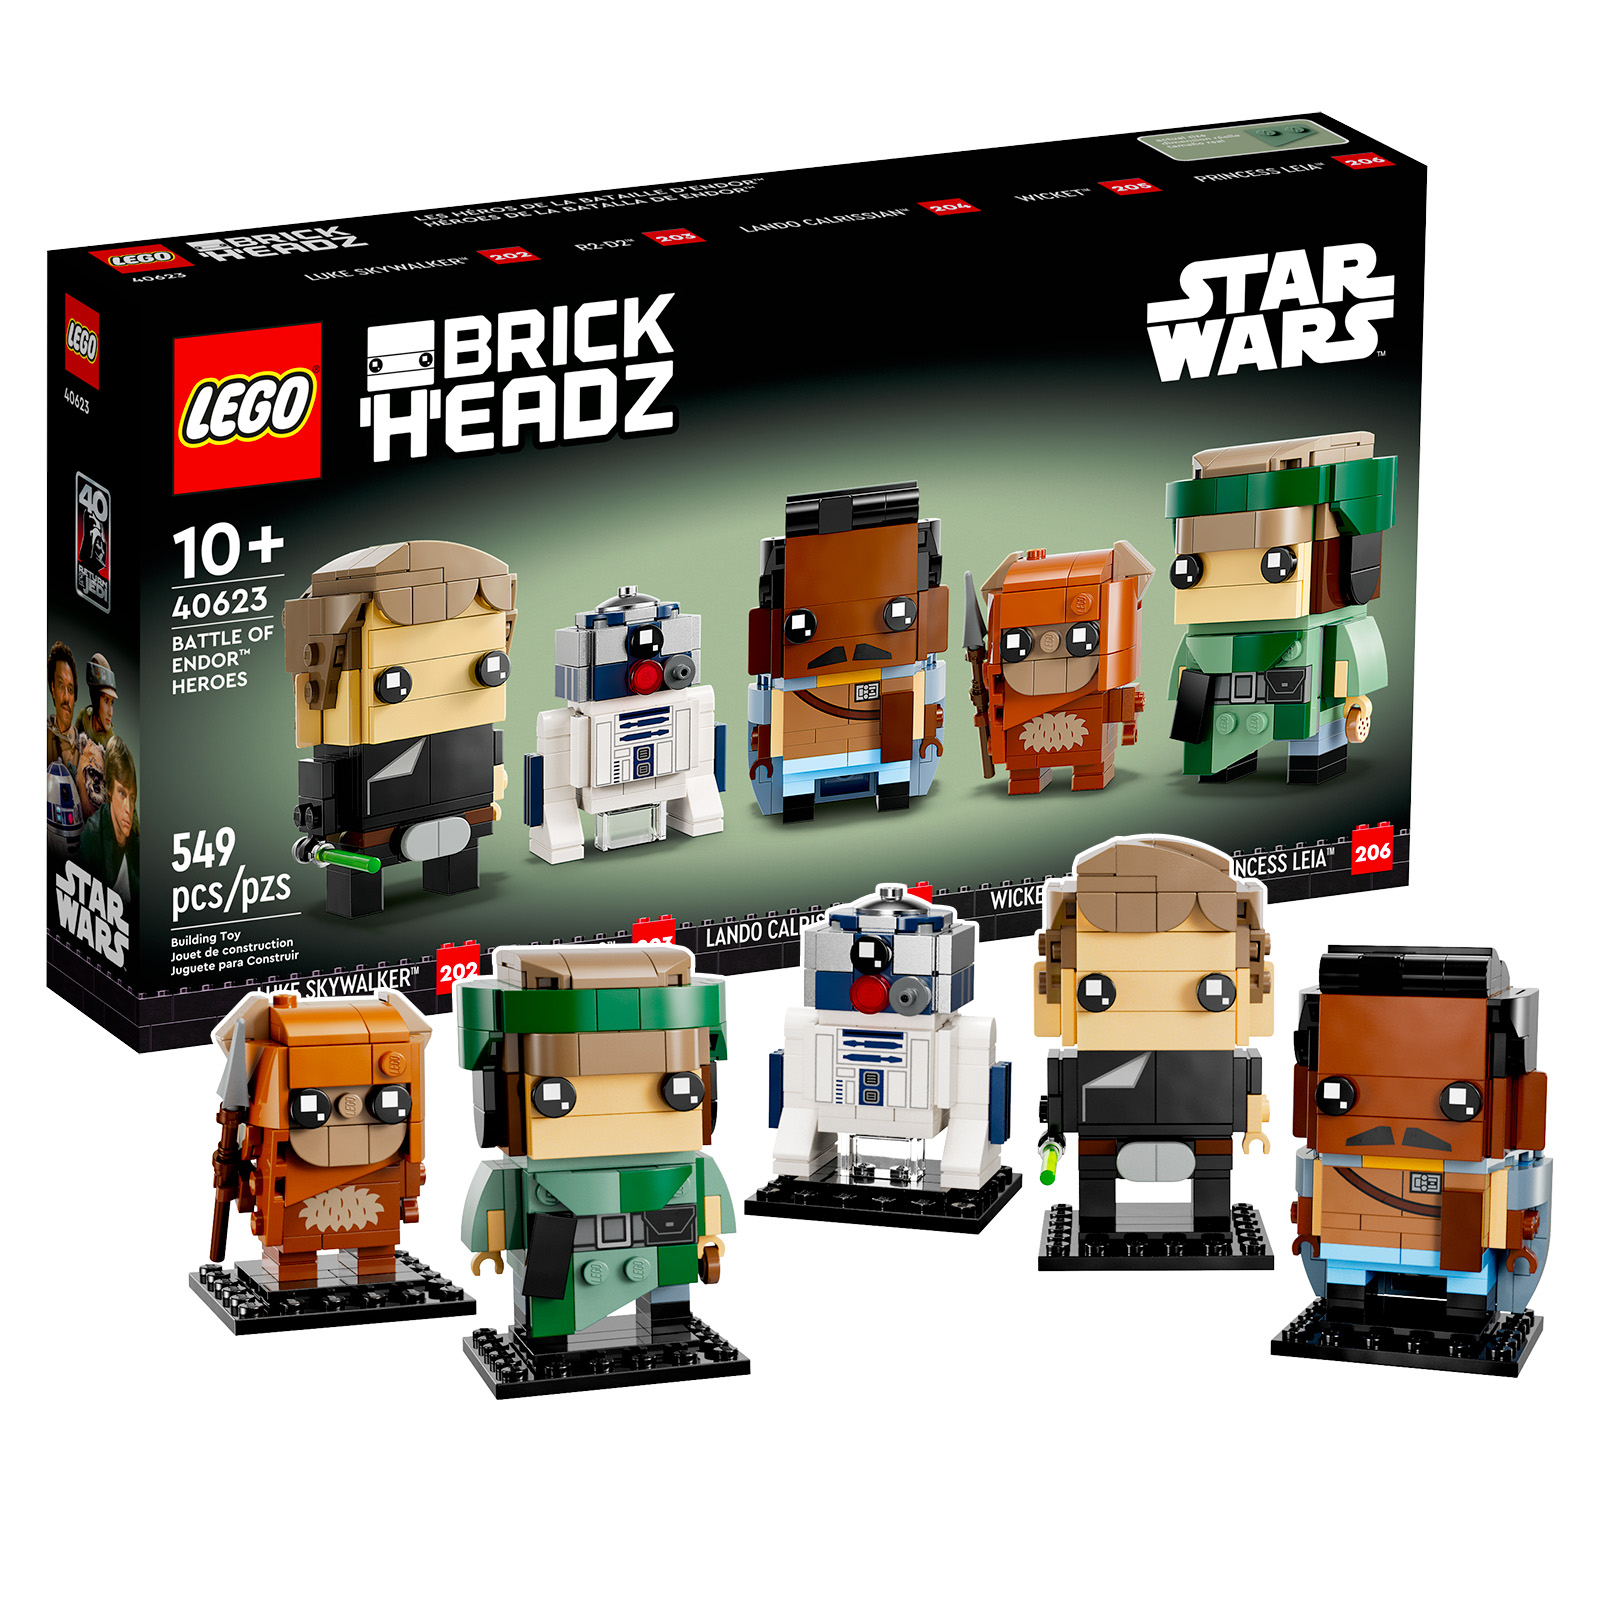 ▻ LEGO Star Wars BrickHeadz 40623 Battle of Endor visuals are available - HOTH BRICKS